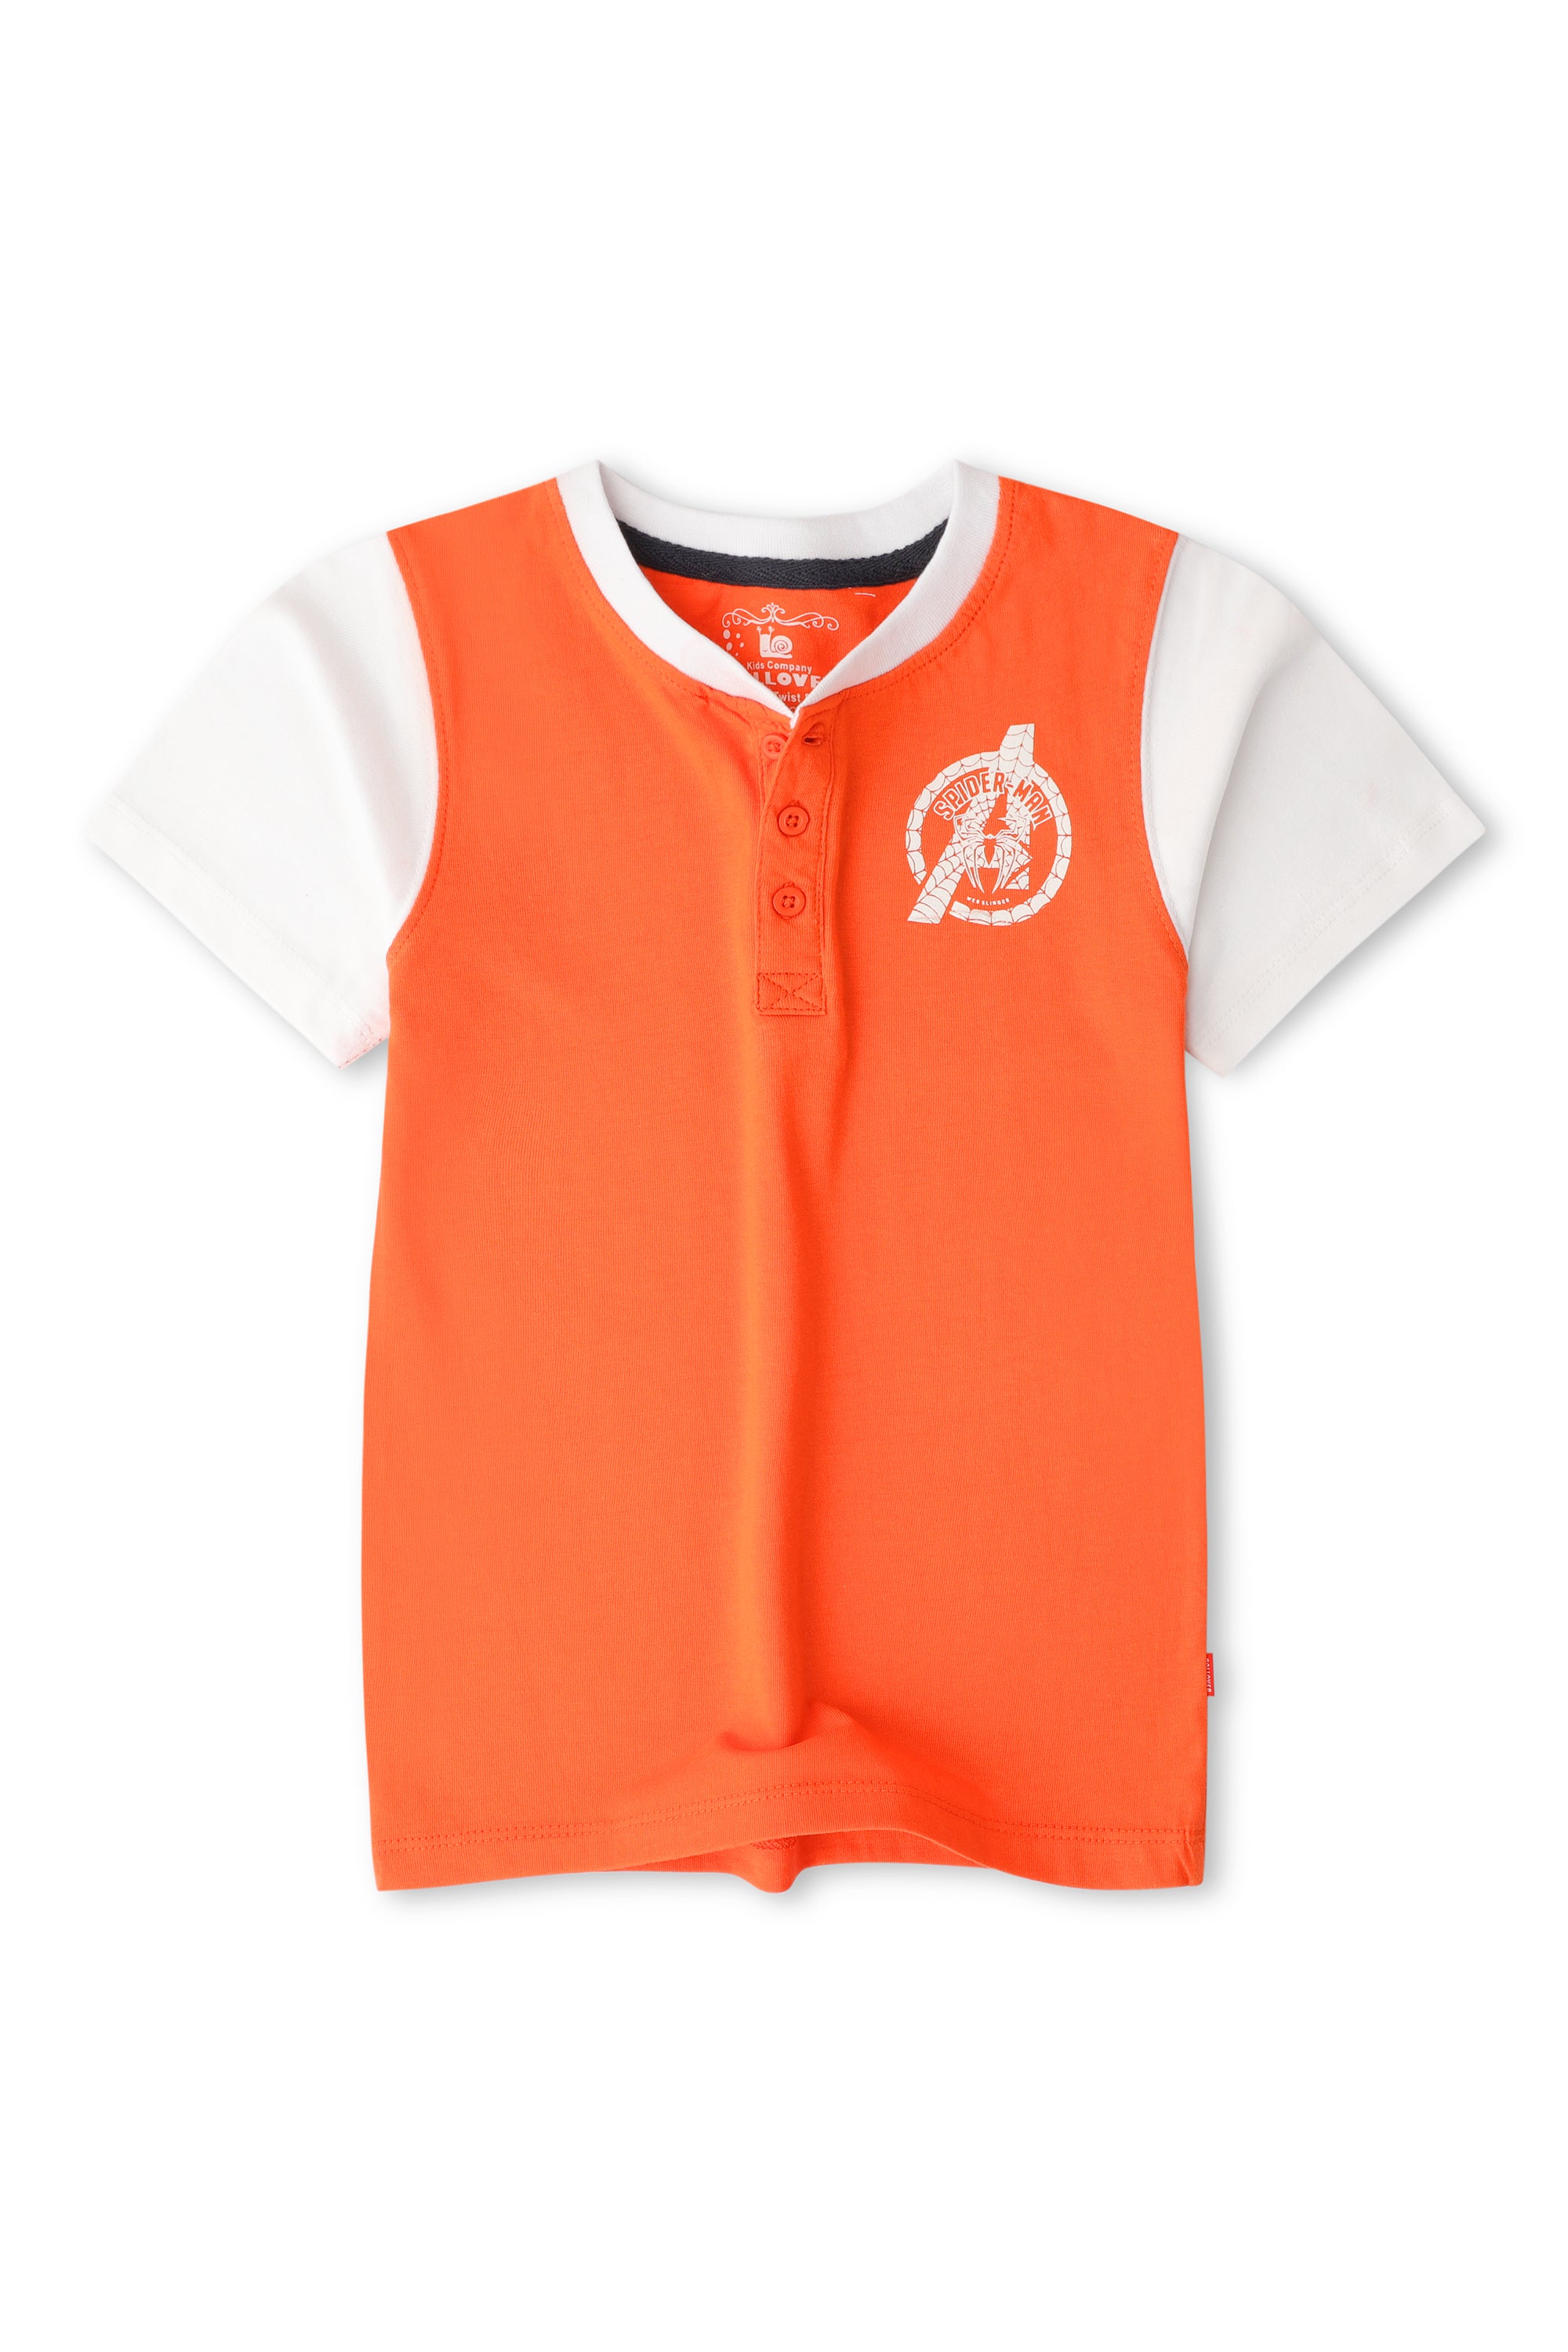 Boys Orange SpiderMan Shirt